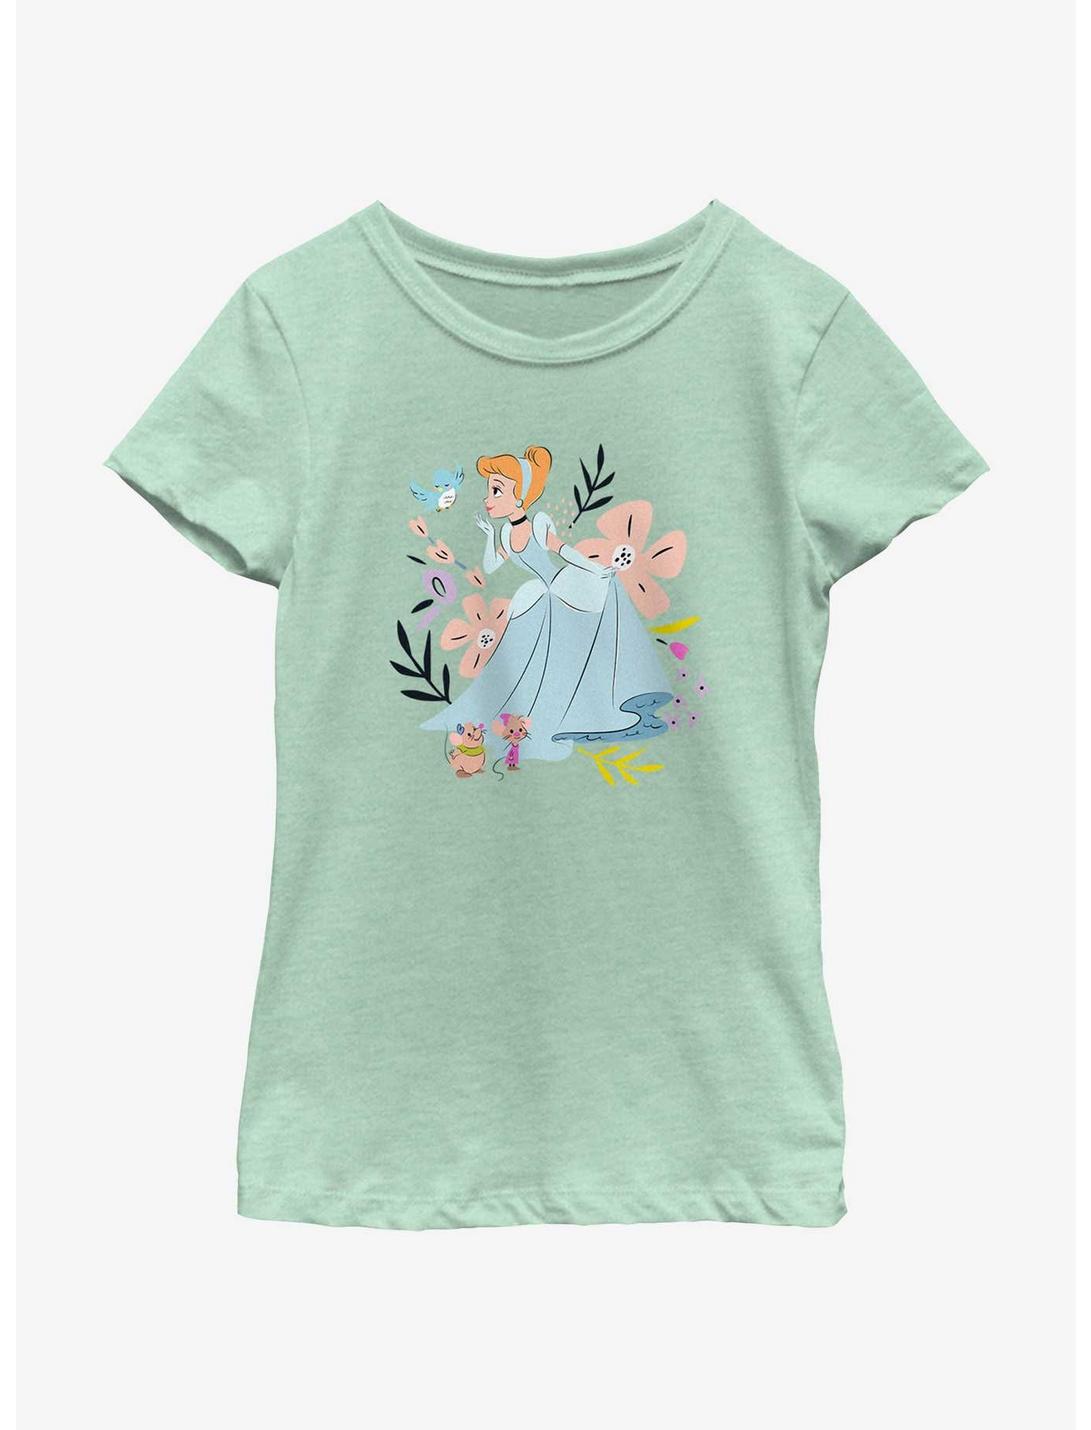 Disney Cinderella Cinderella And Friends Youth Girls T-Shirt, MINT, hi-res